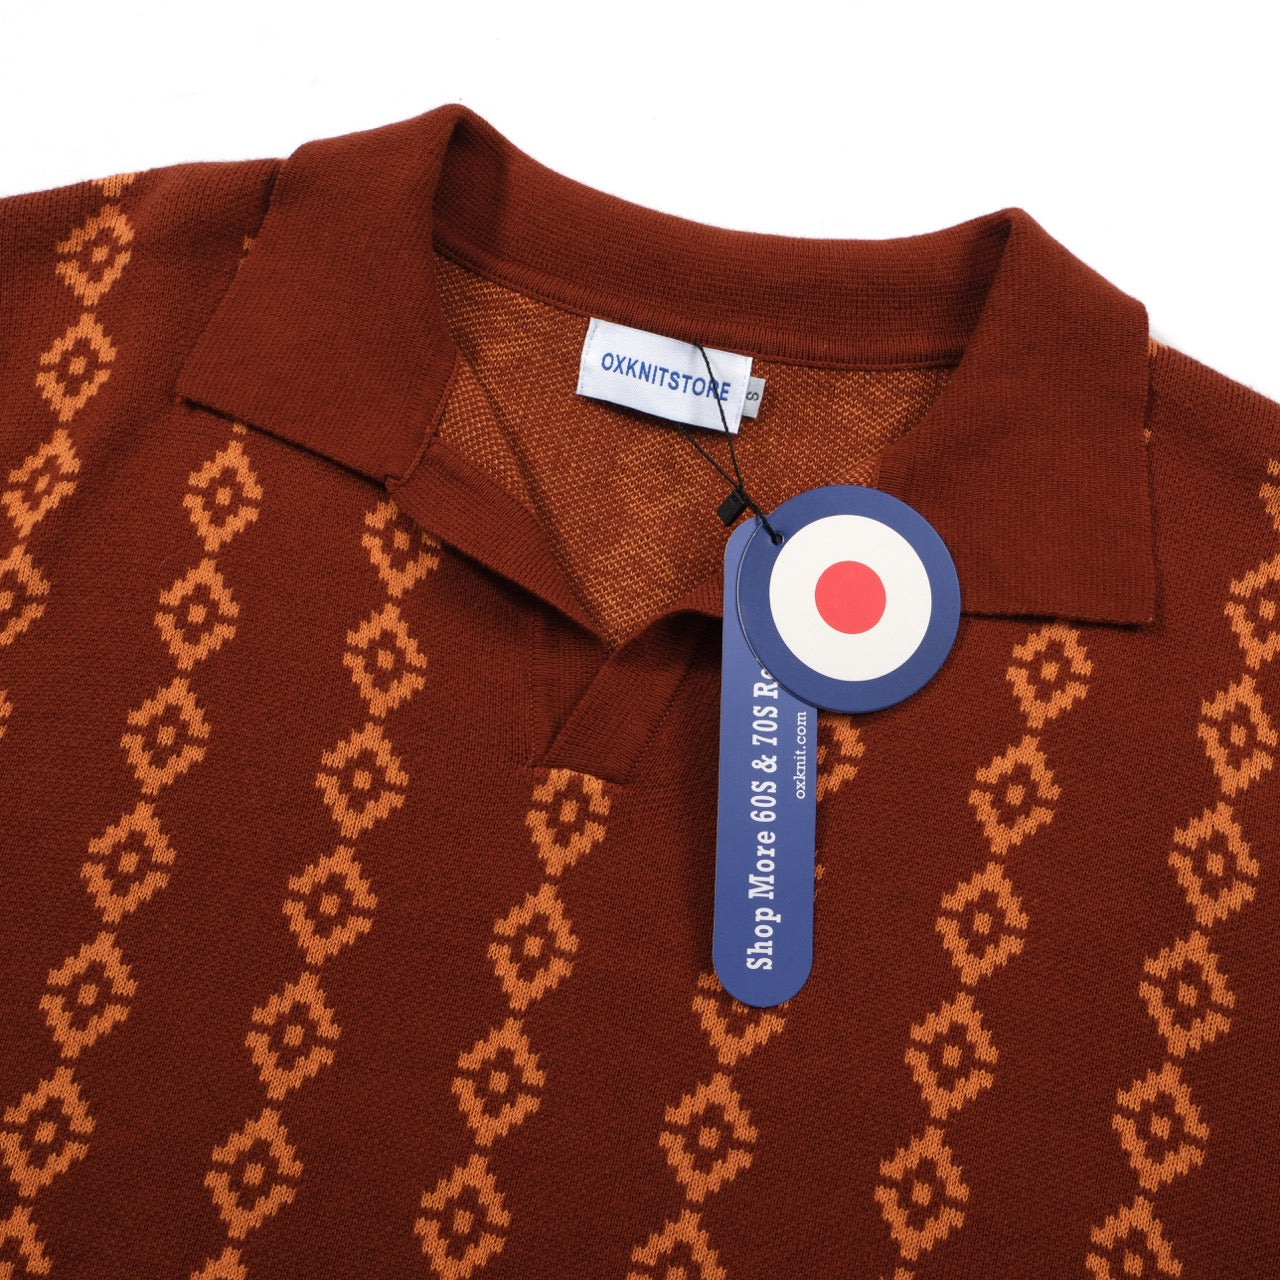 OXKNIT Men Vintage Clothing 1960s Mod Style The Sebastian Dark Brown Knit Retro Polo Shirts